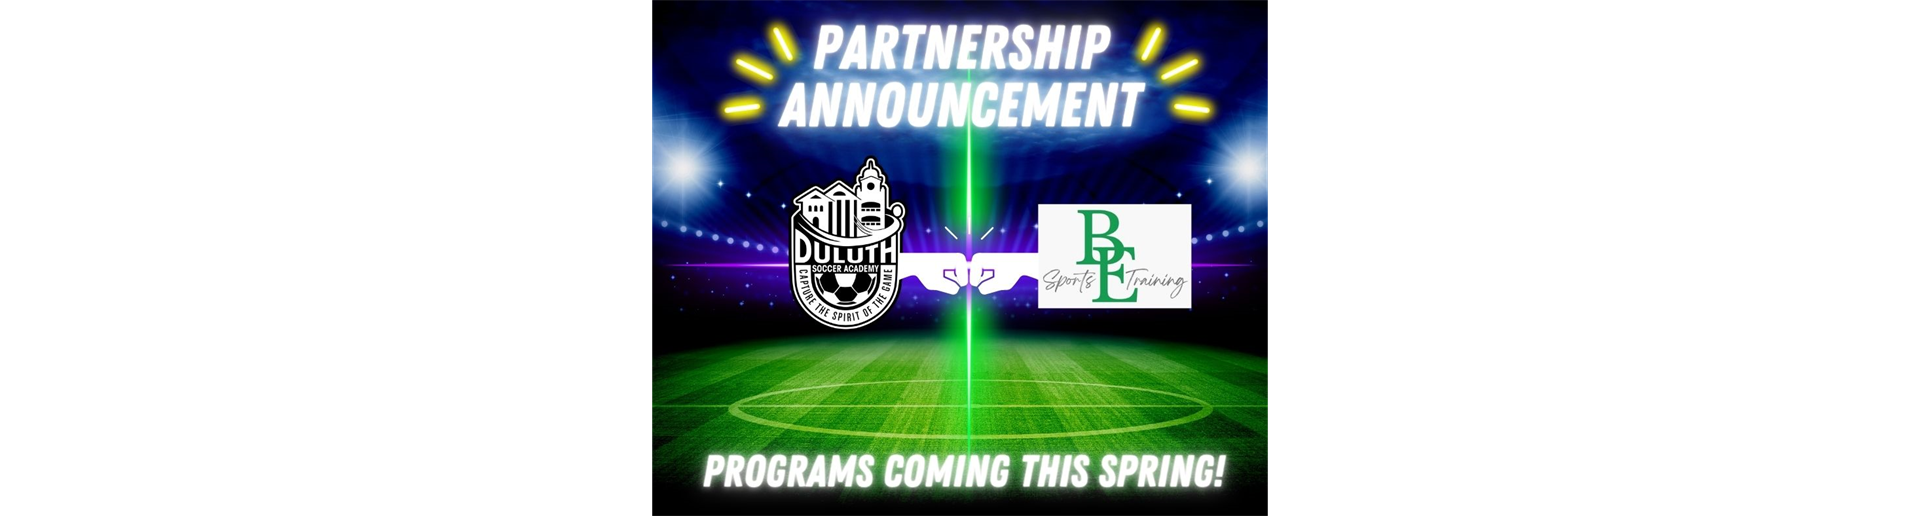 New partnership announcement!!